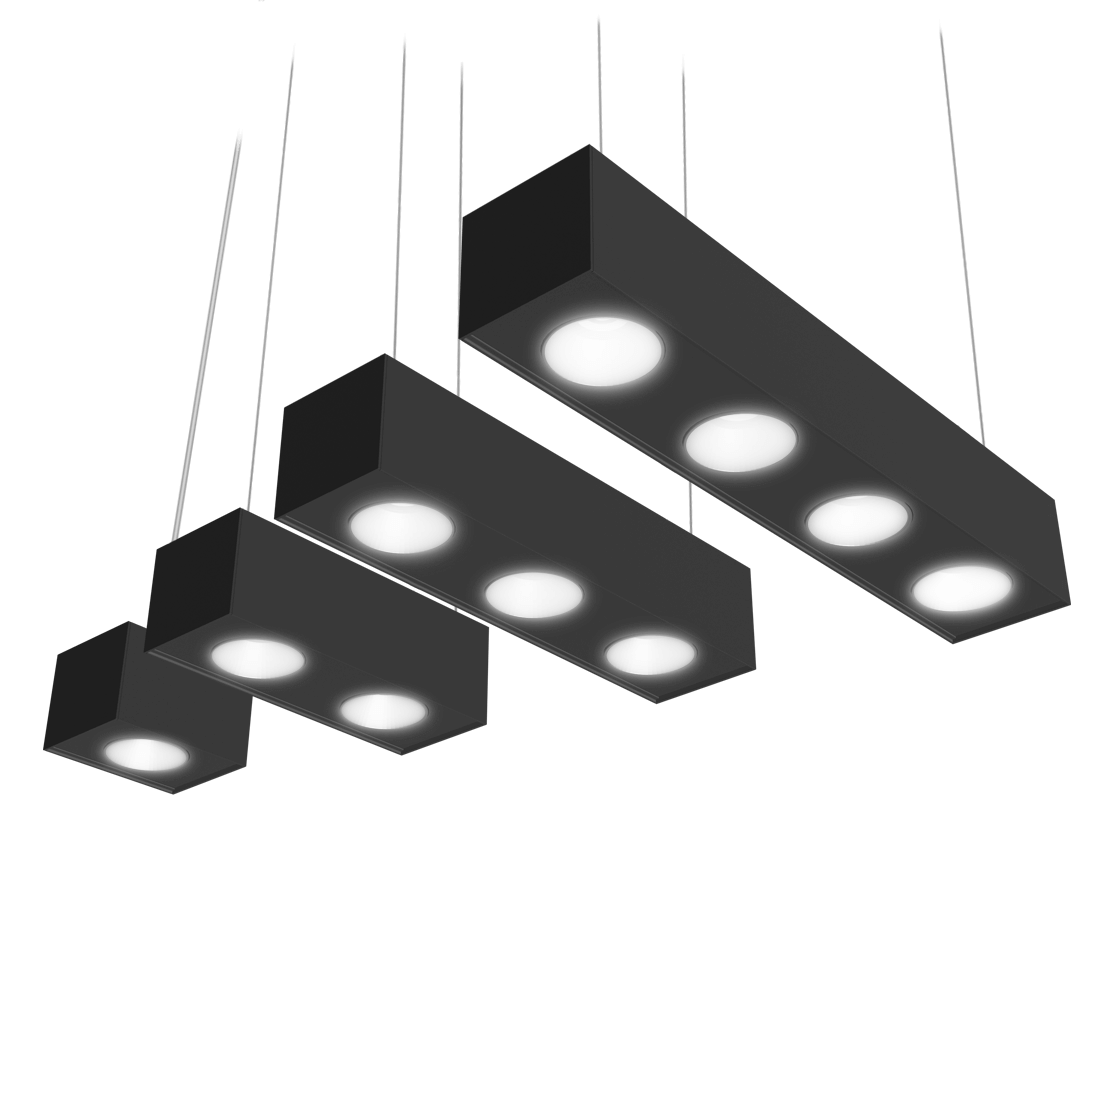 4 black pendant fixtures with spots lights